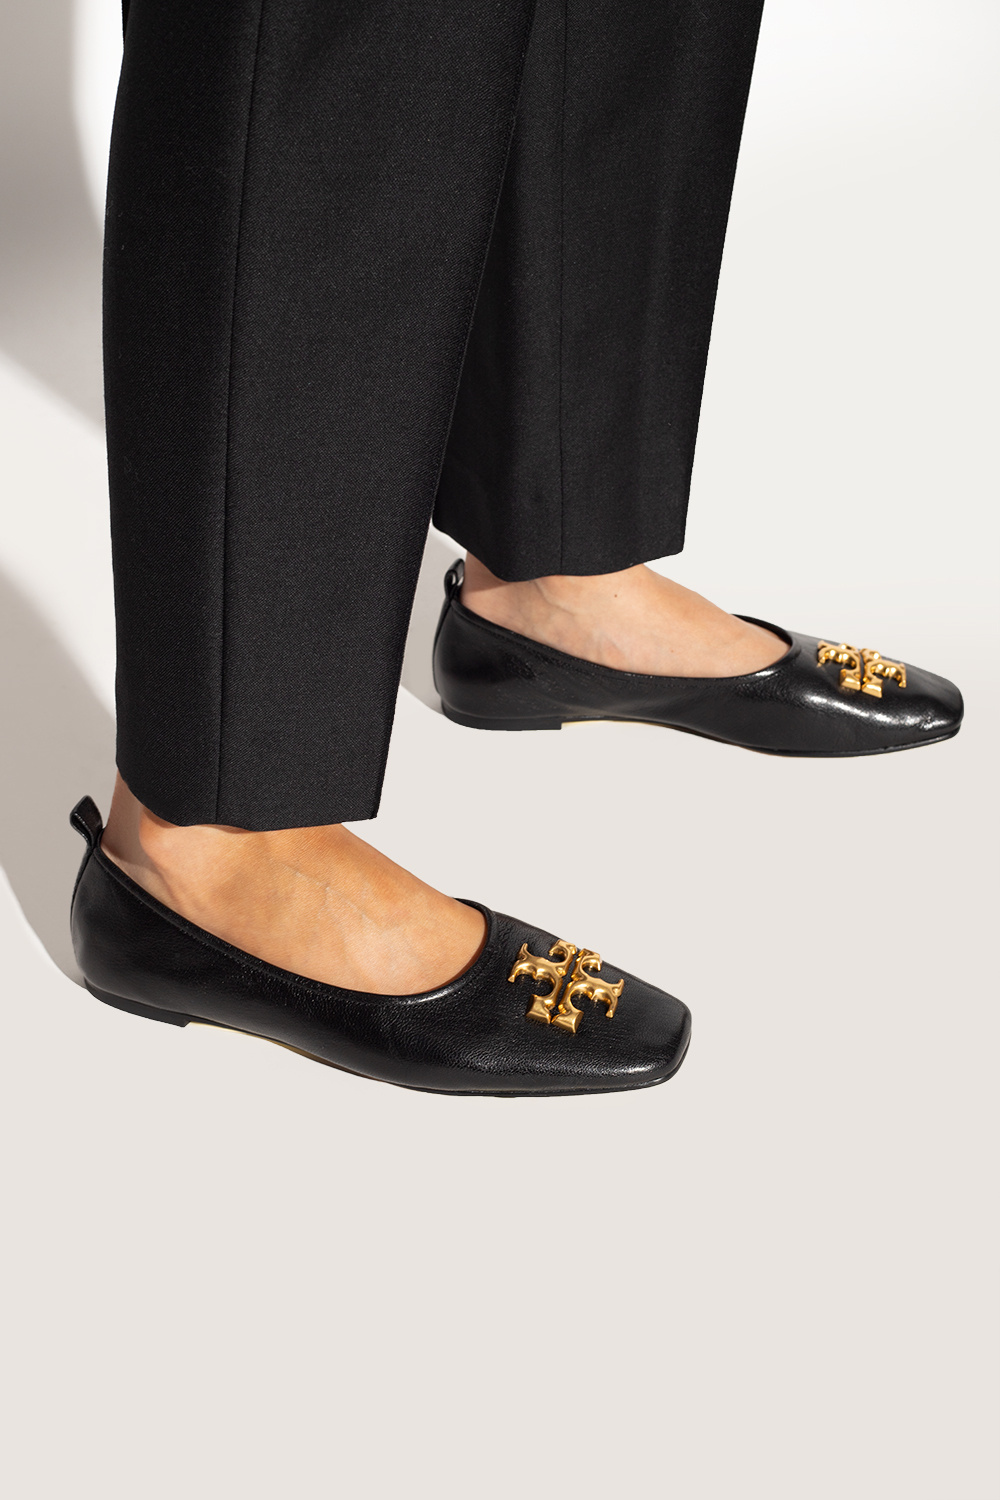 Tory Burch Women's Black Leather Eleanor Ballet Flats Shoes